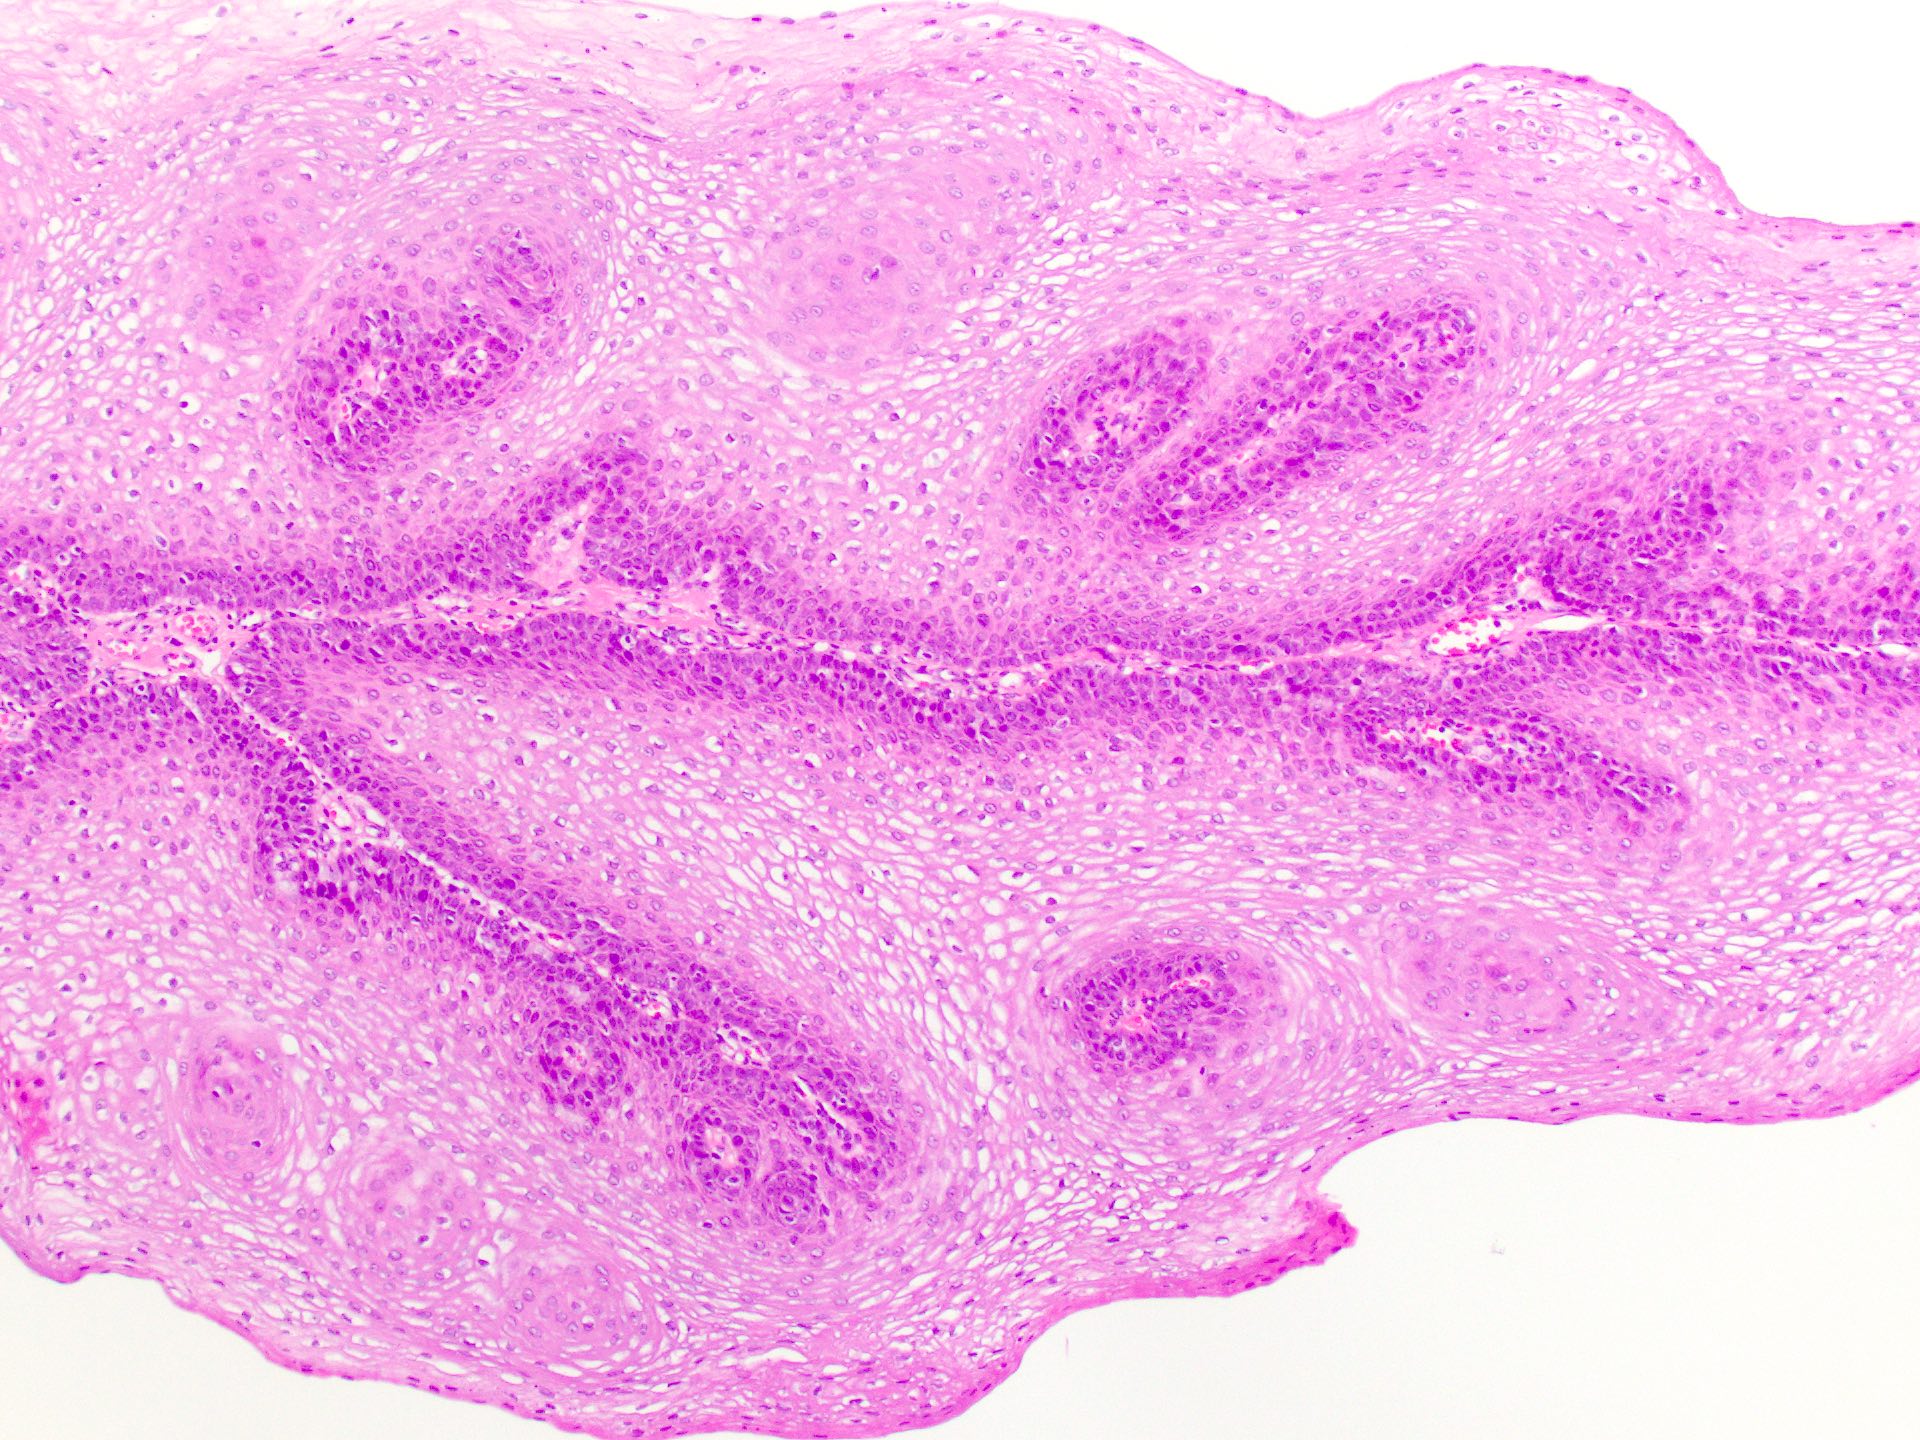 cancer colon markers simptome ale verucilor rectale